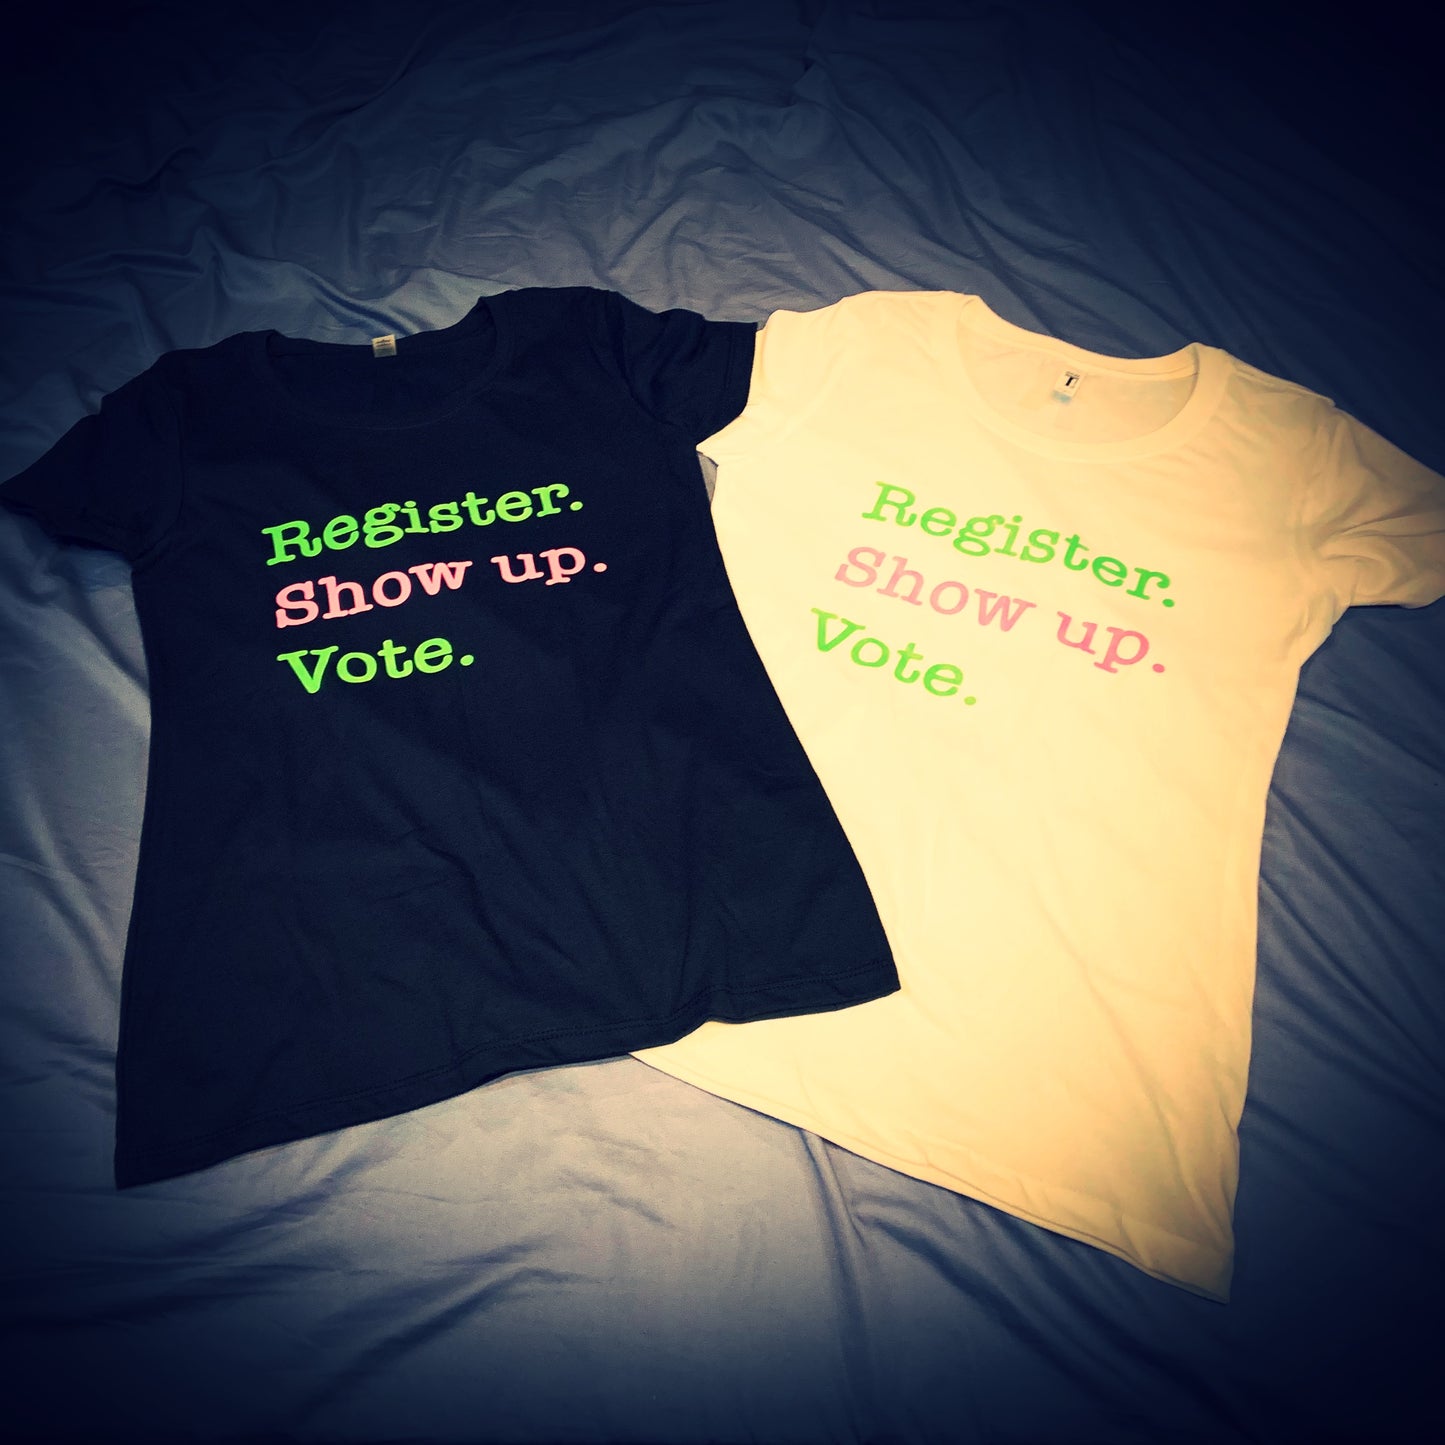 Greek - AKA Registrar, Show Up, and Vote Shirt